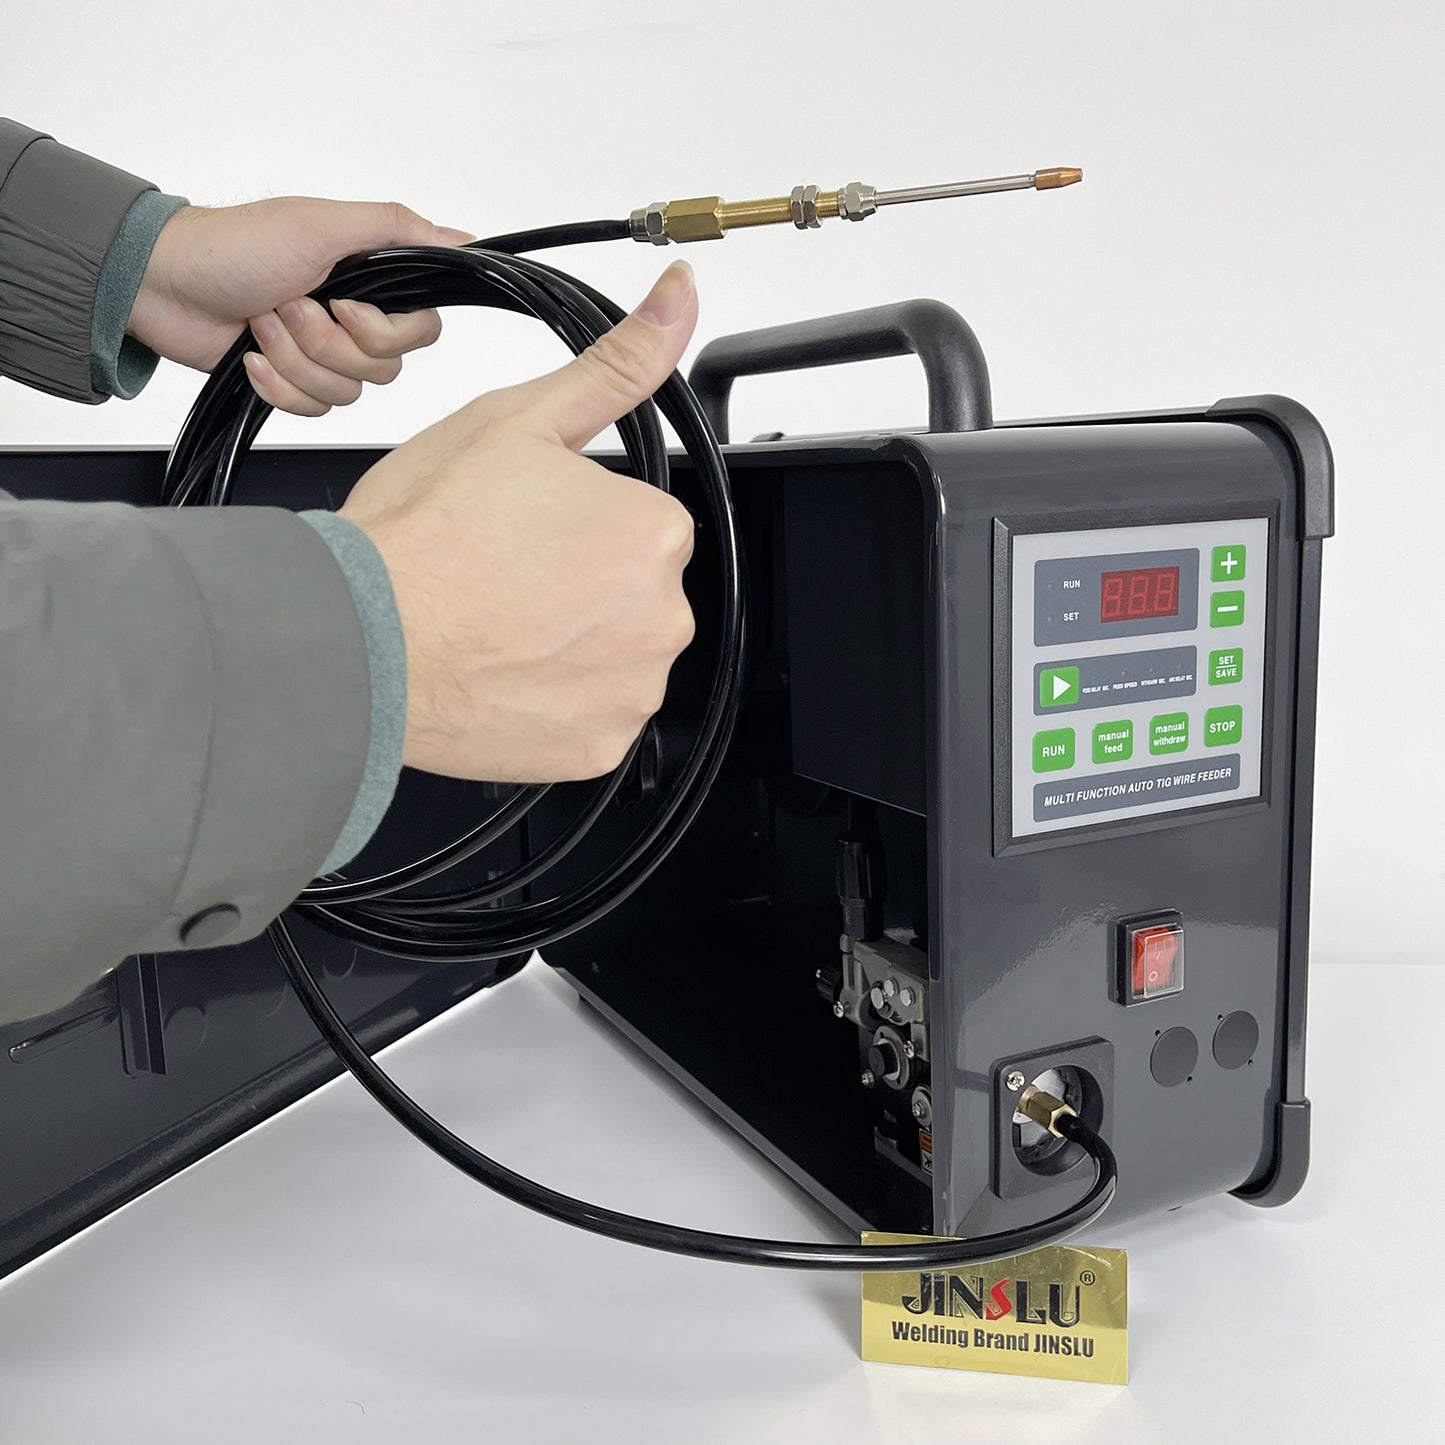 WF-007E Laser Welding Wire Feeder - Automatic Digital Control, 110